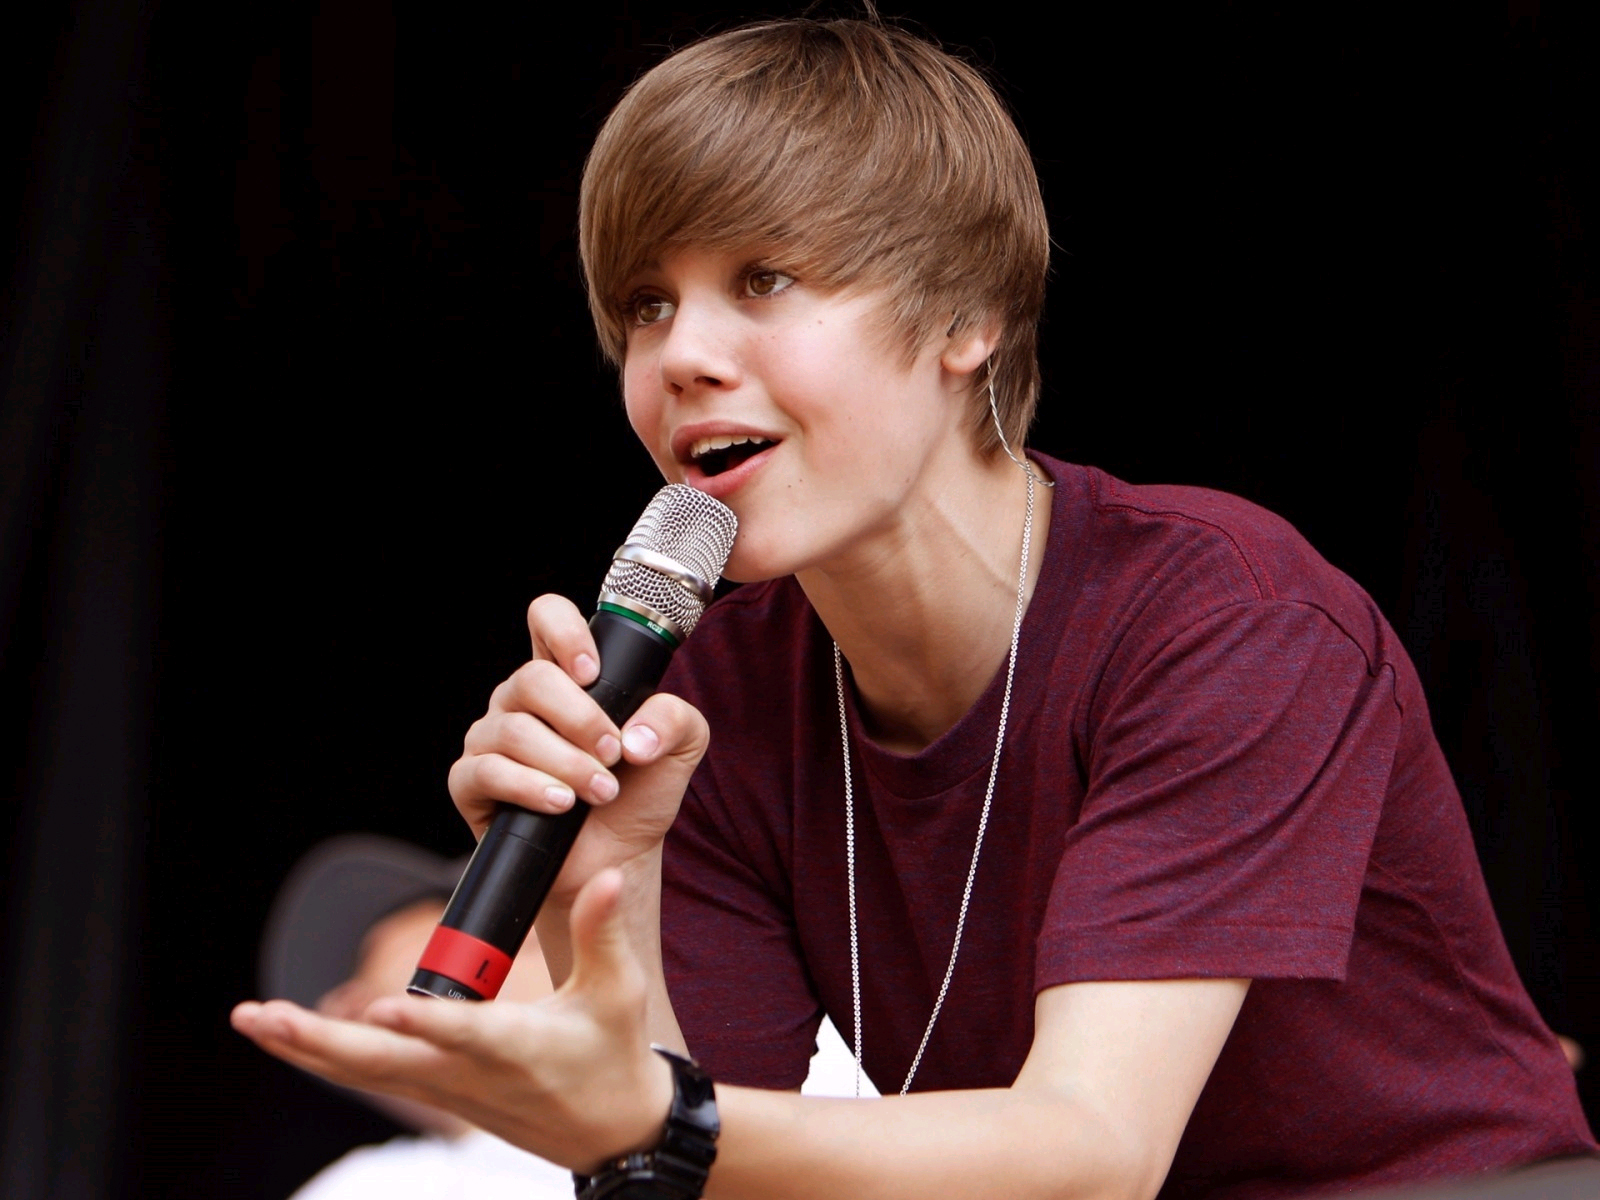 Justin Bieber《My World》2009[FLAC分轨] - 音乐地带 - 华声论坛